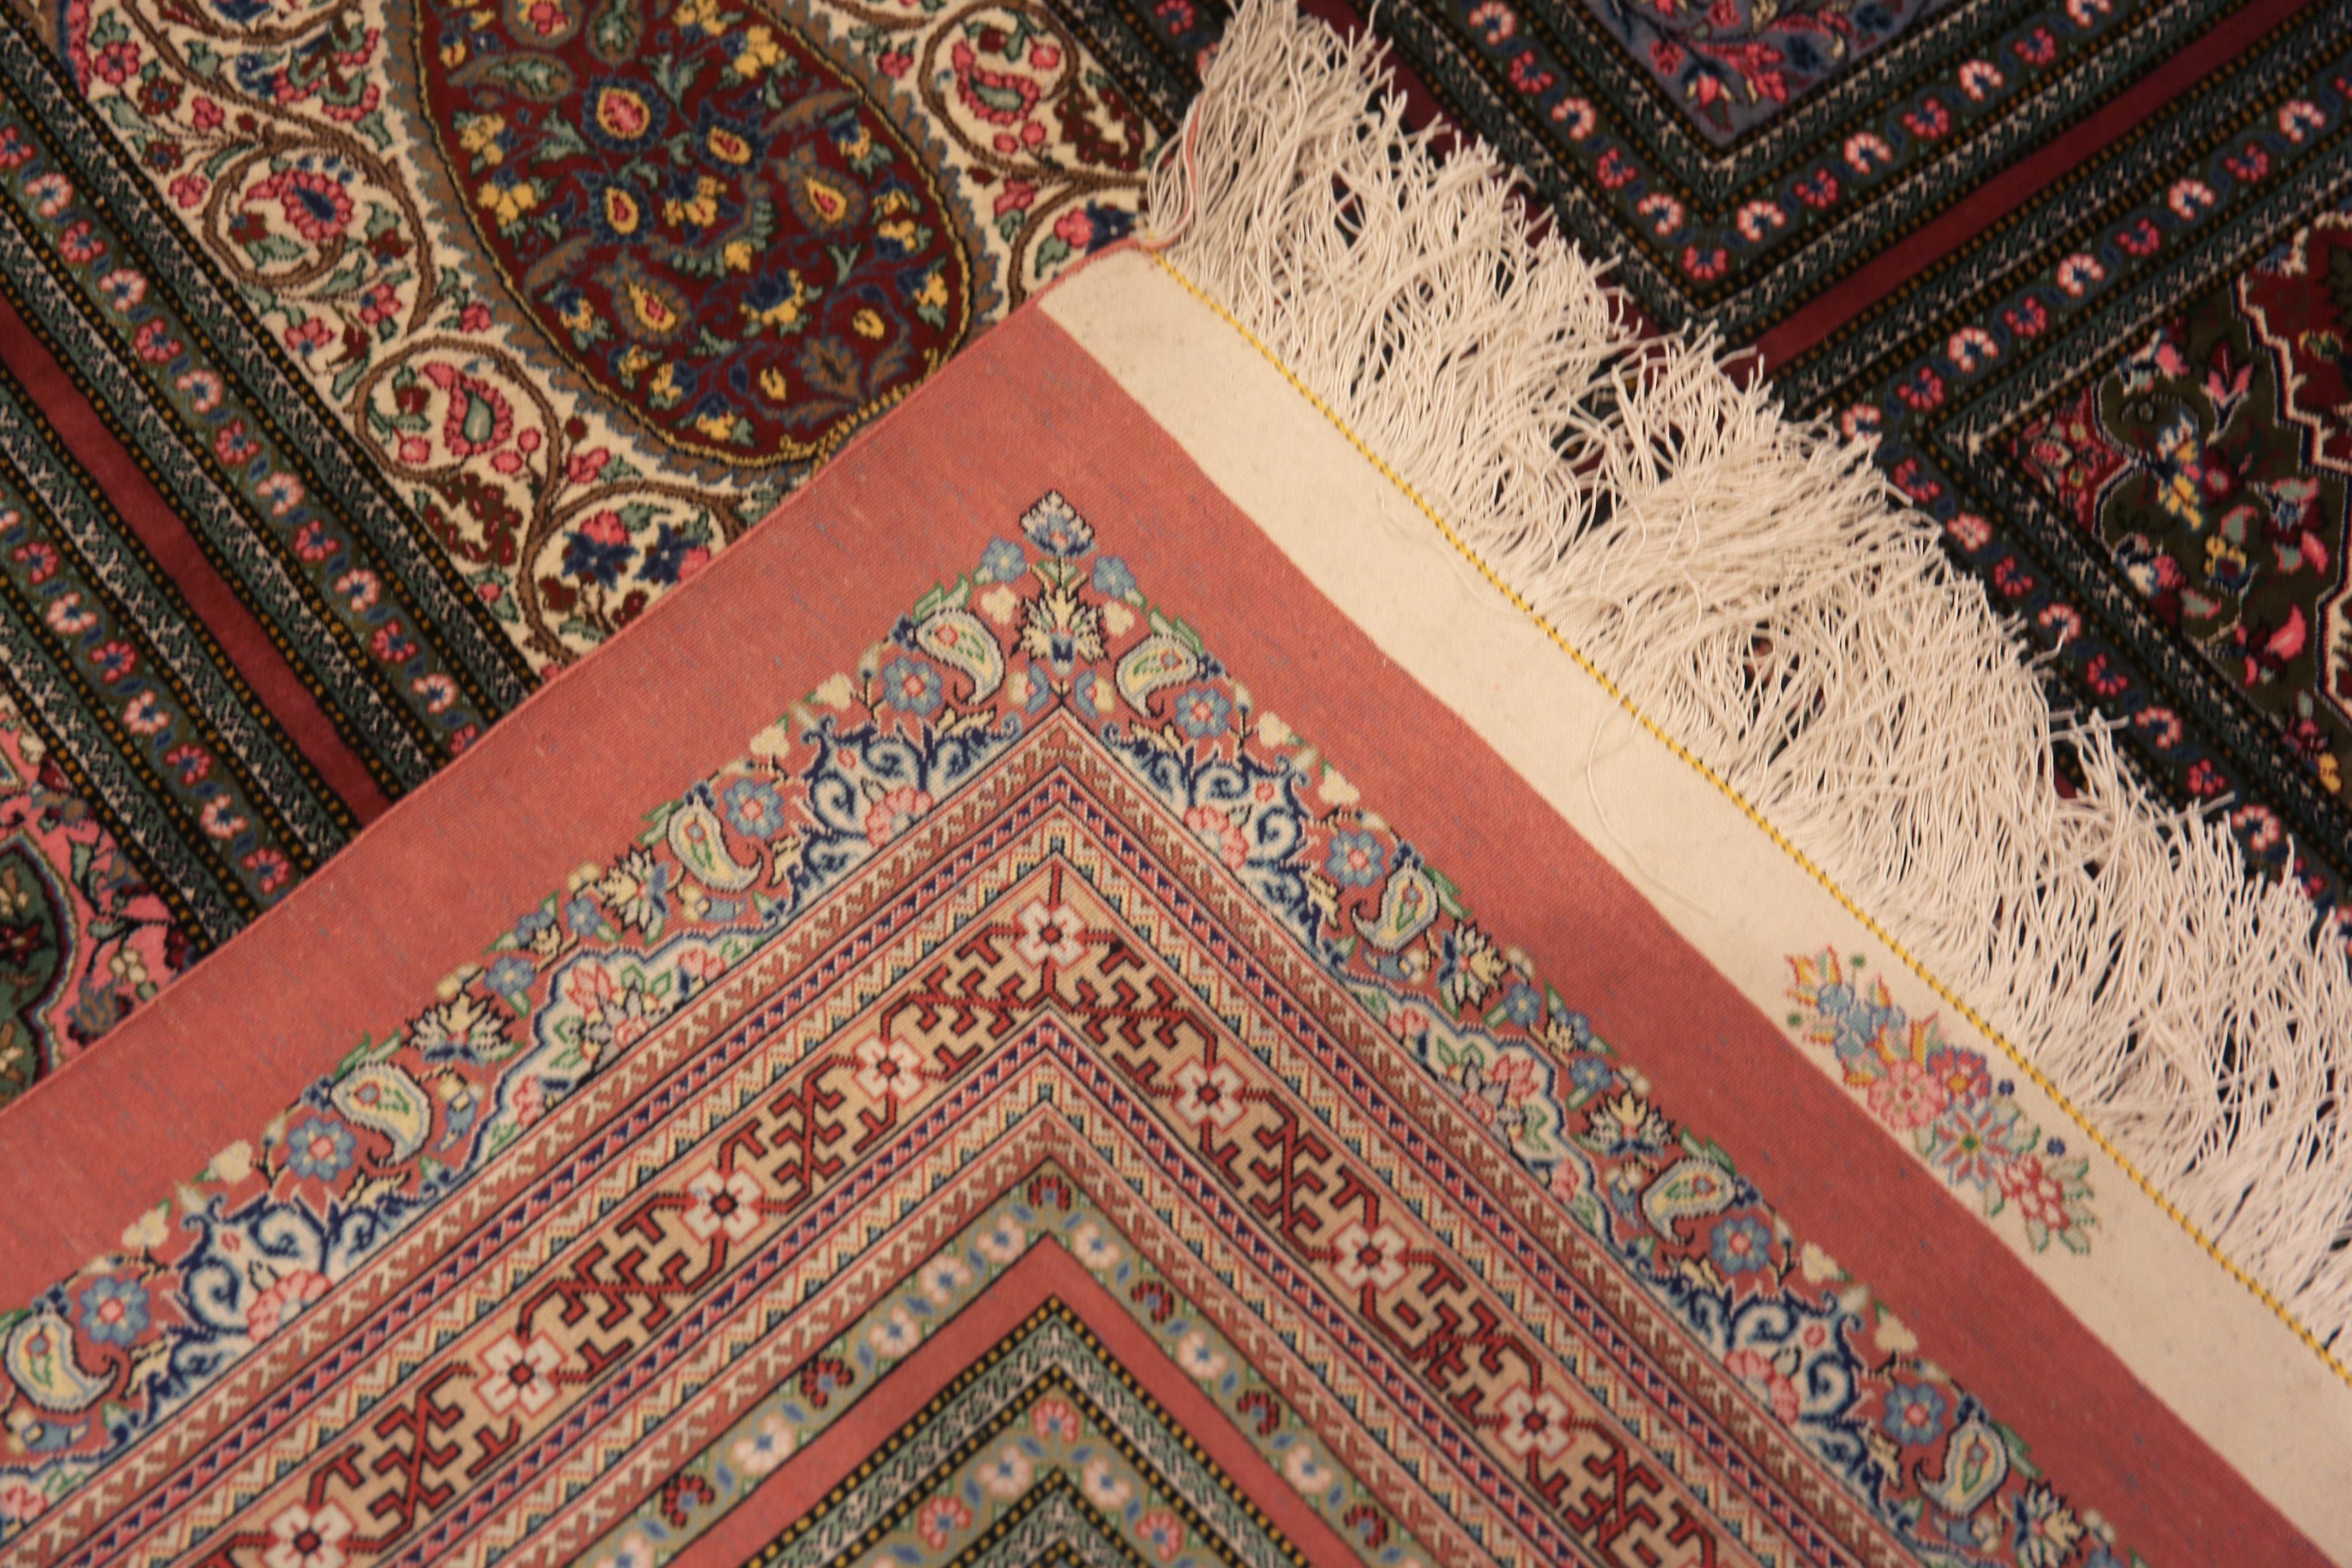 Beautiful Floral Gallery Size Vintage Luxury Persian Silk Qum Rug 5'2